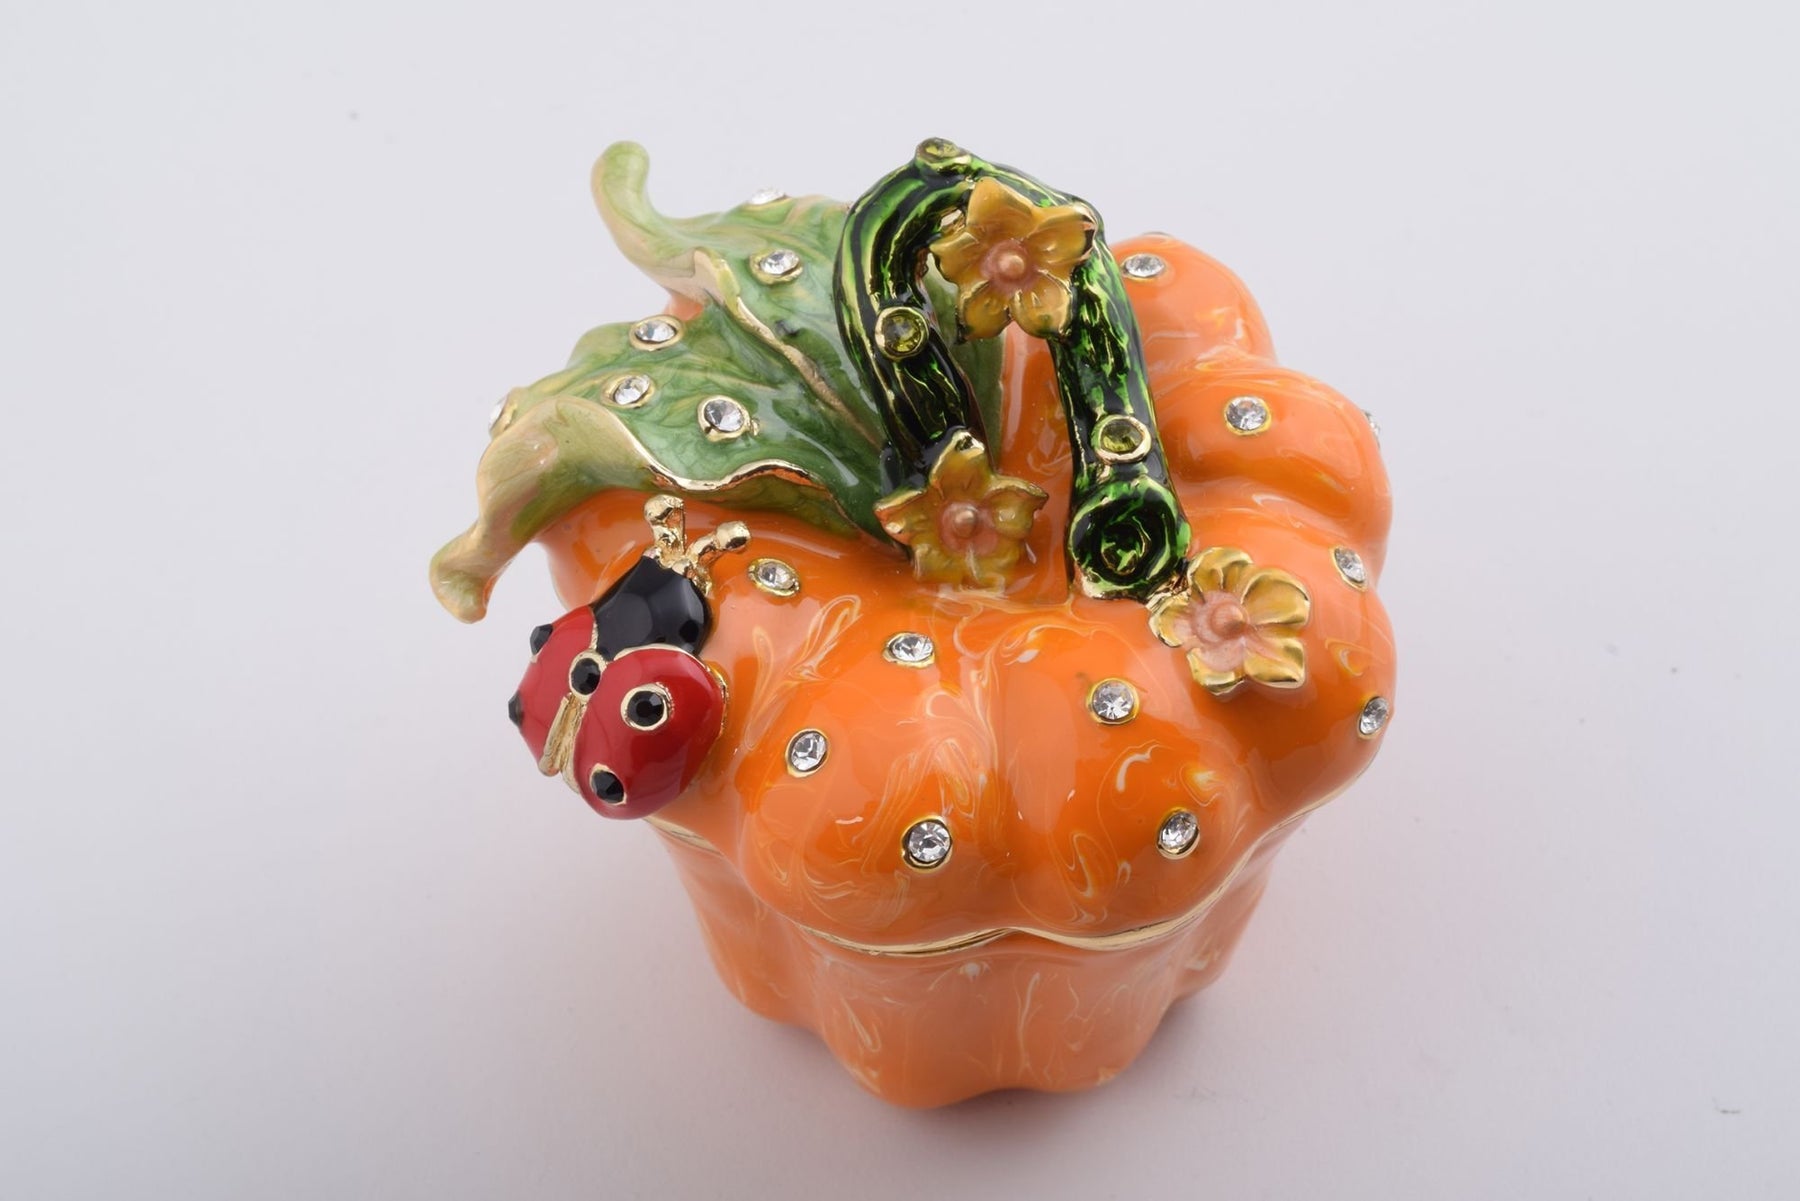 Keren Kopal Pumpkin with a Ladybug Box  64.00